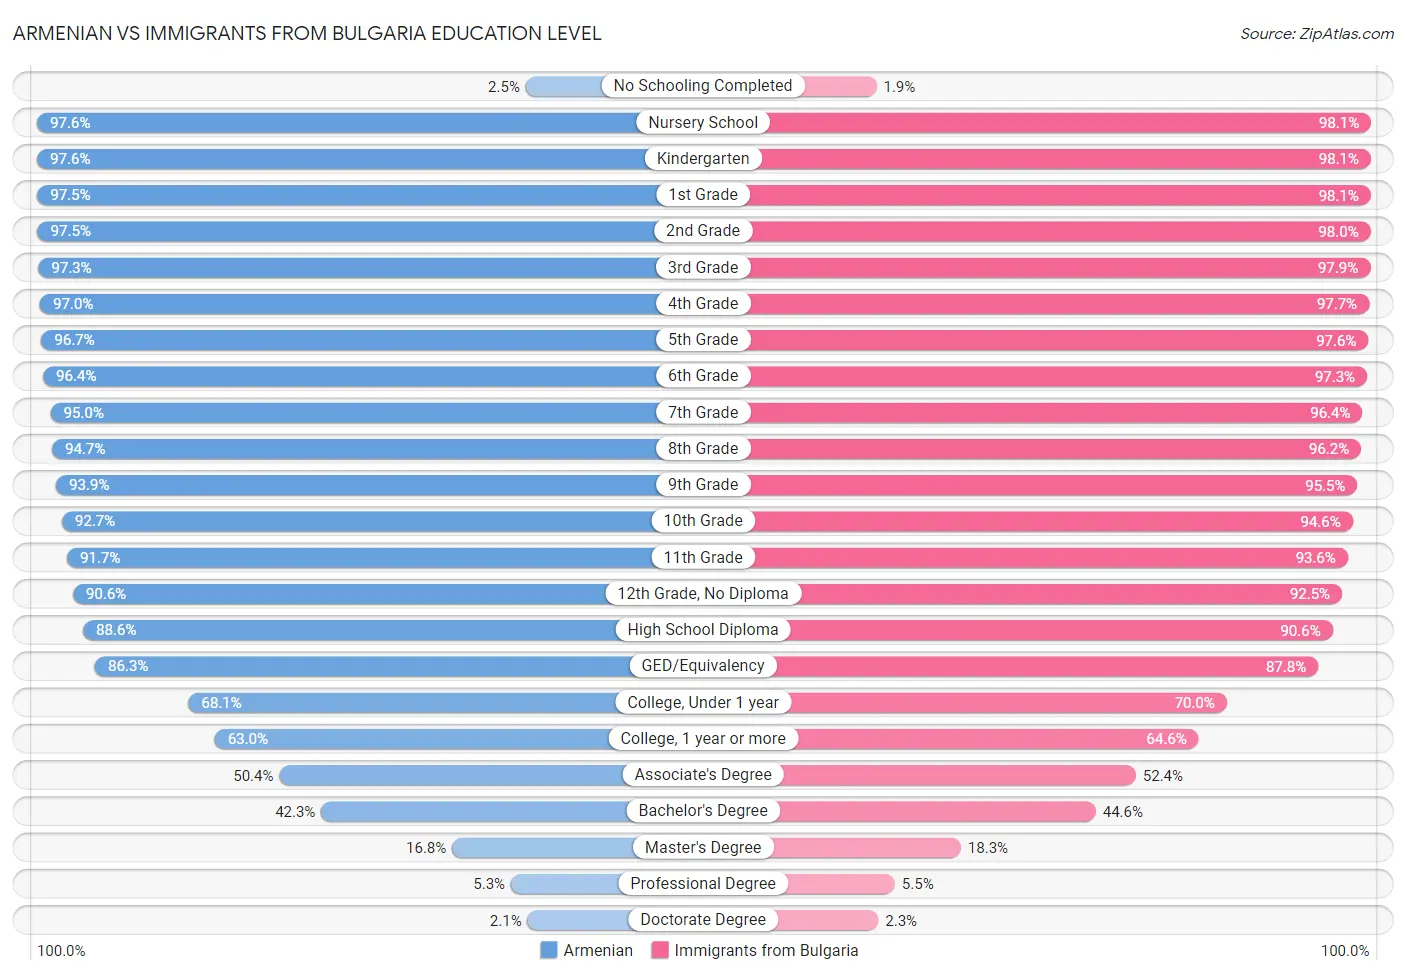 Armenian vs Immigrants from Bulgaria Education Level